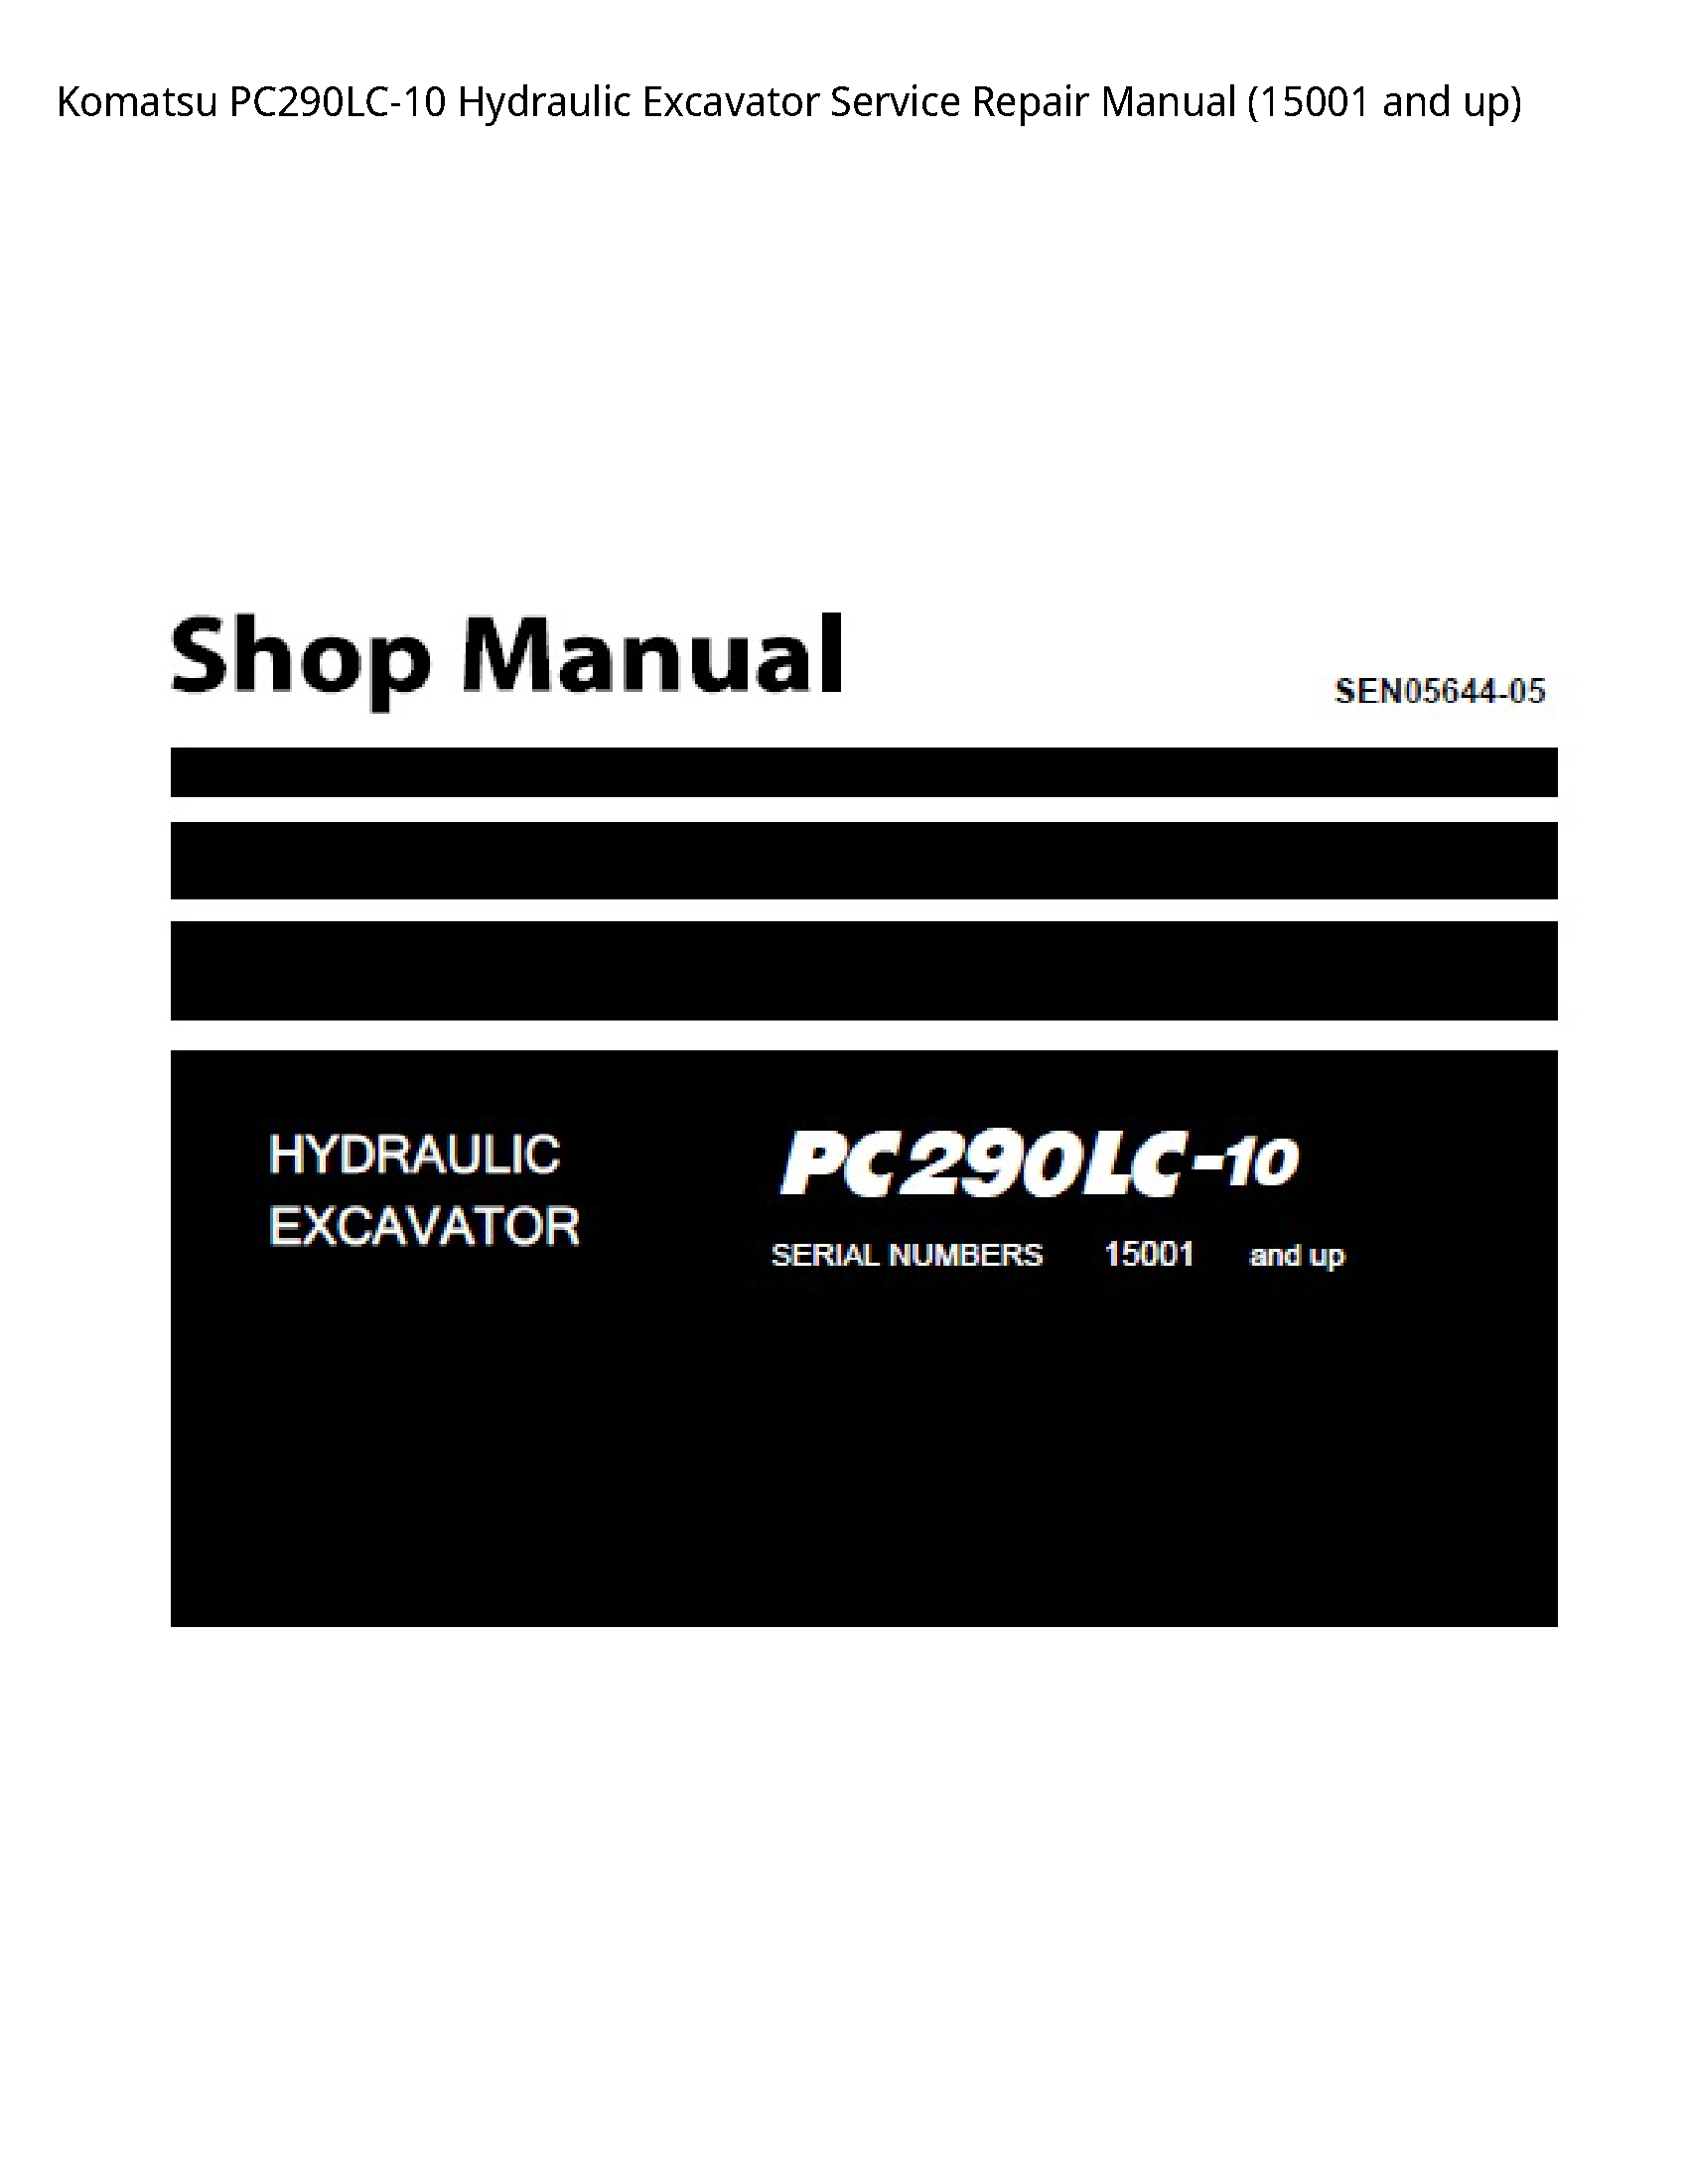 KOMATSU PC290LC-10 Hydraulic Excavator manual